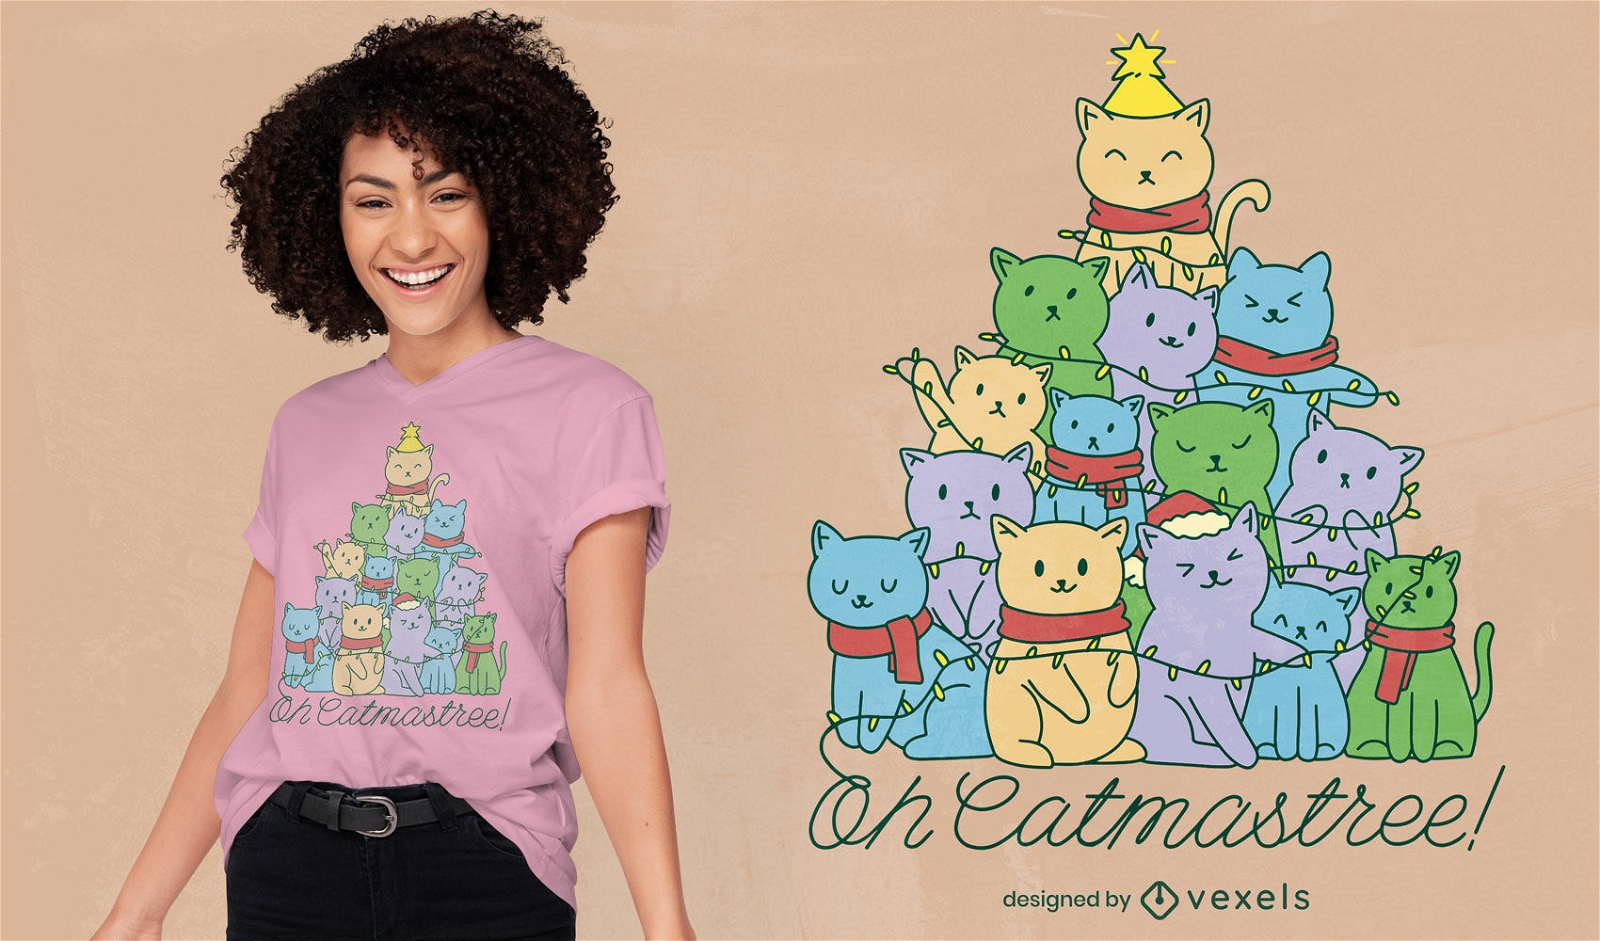 Oh catmastree Christmas t-shirt design